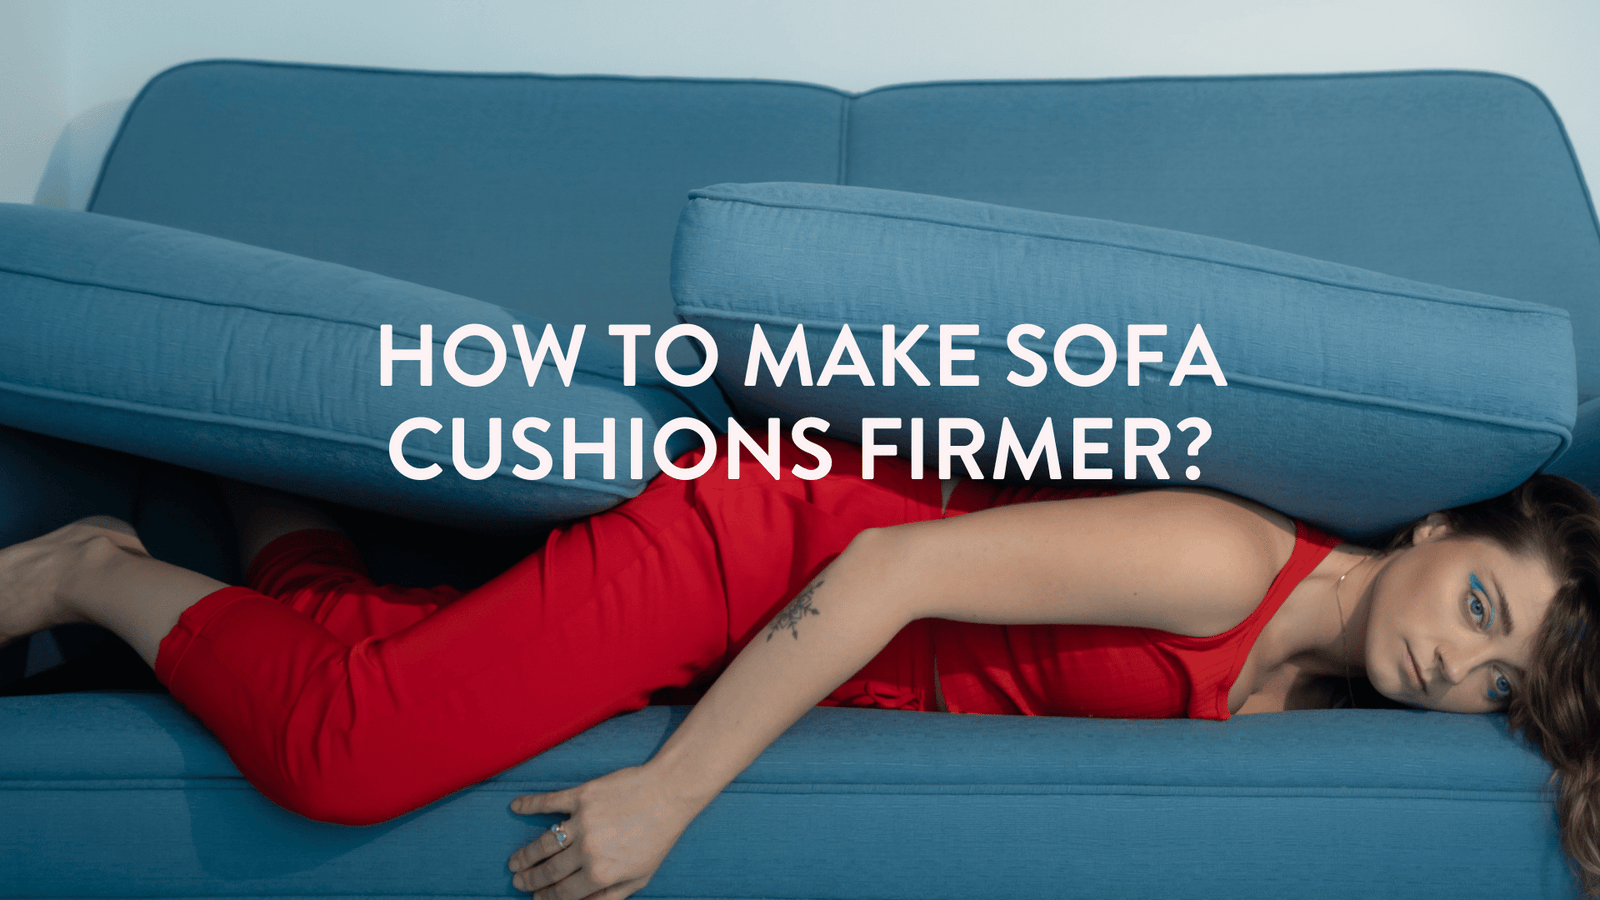 How To Make Sofa Cushions Firmer?